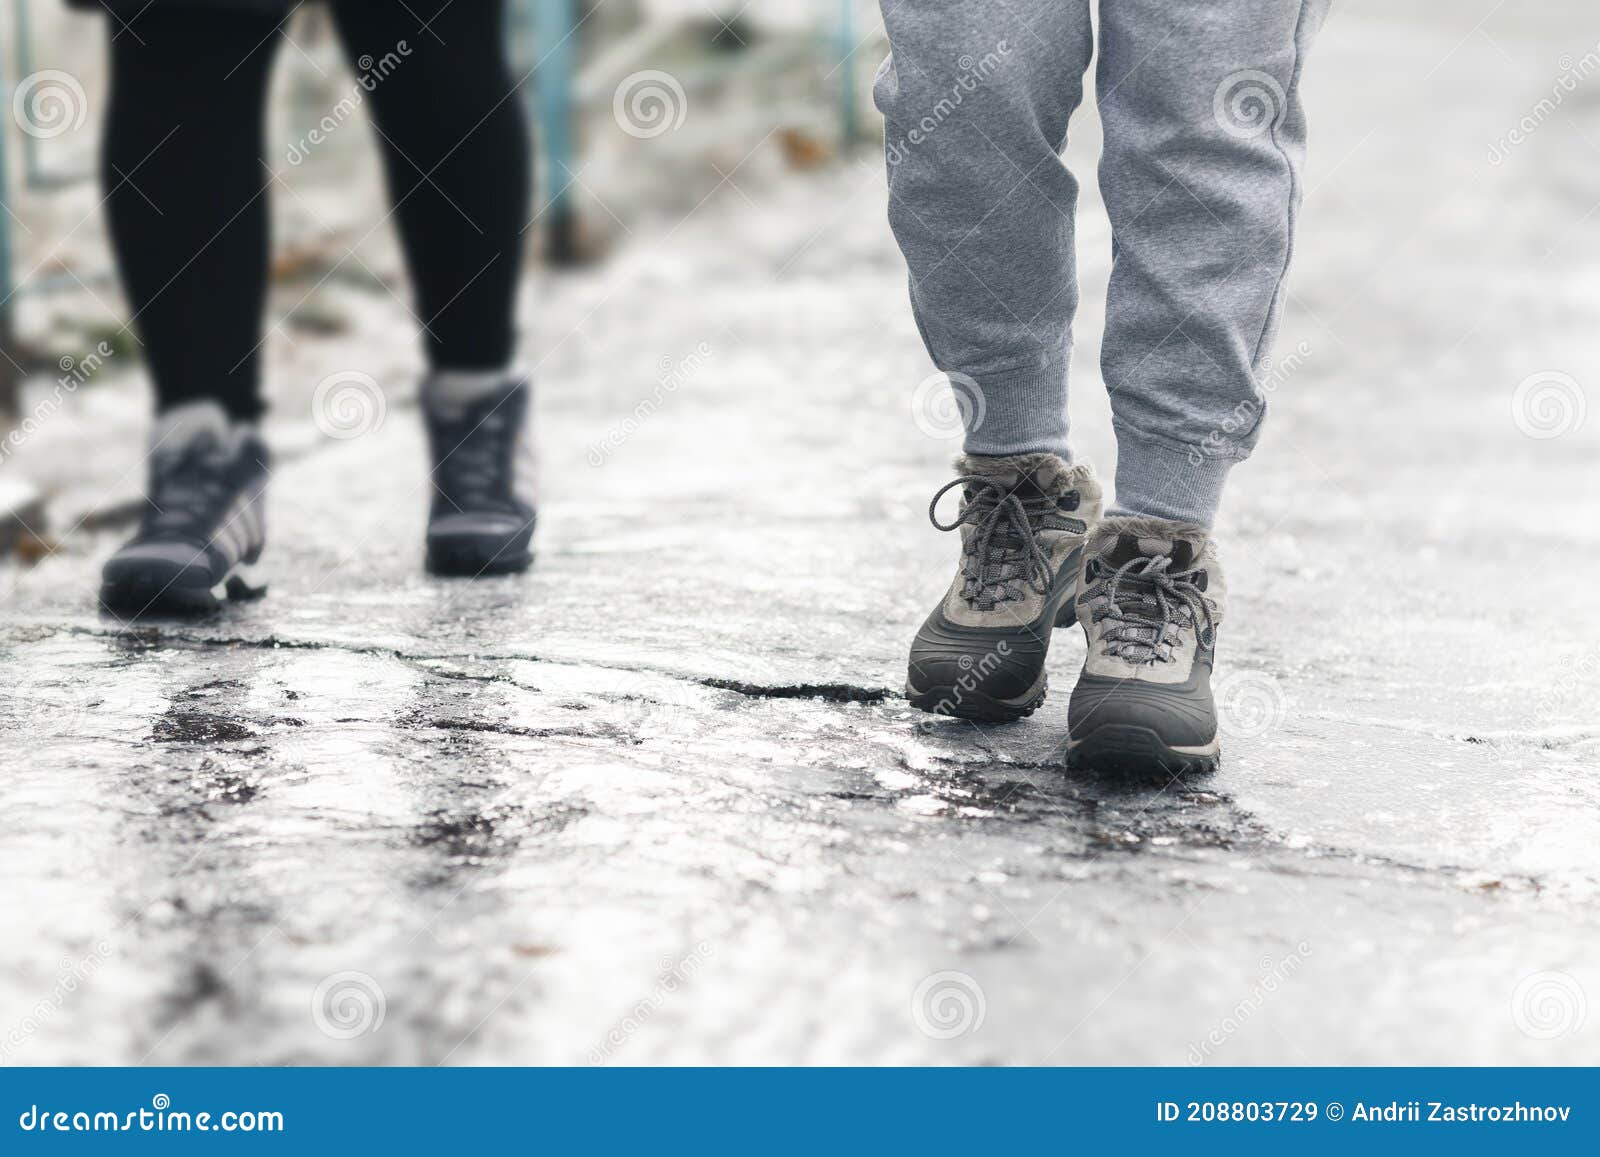 pedestrians glide along the icy sidewalk. winter ice on footpaths